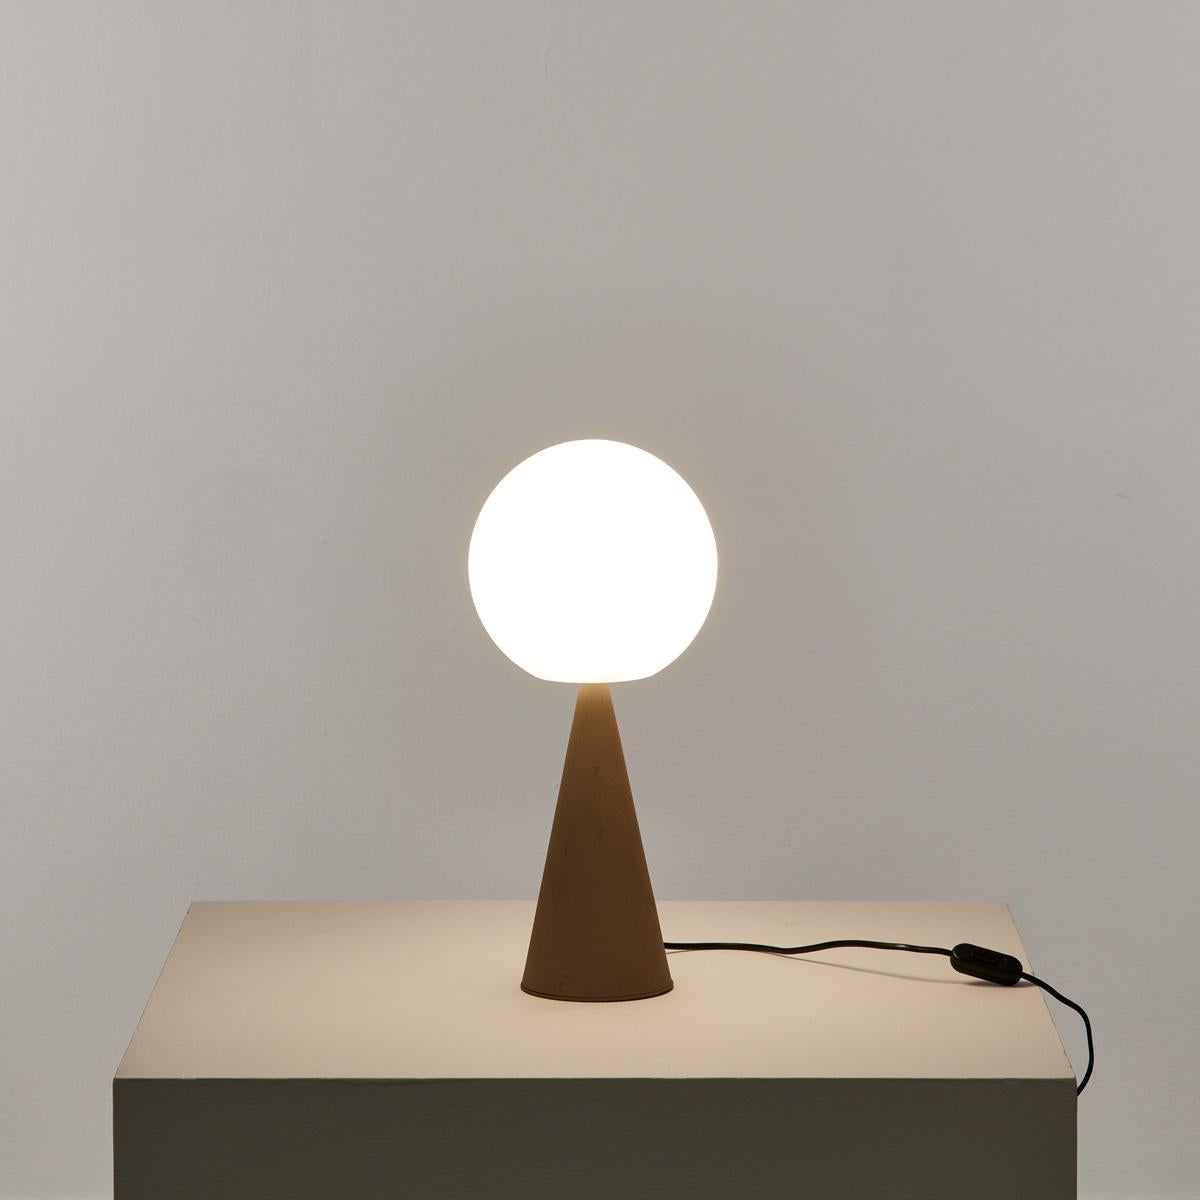 Modern Gio Ponti Bilia Lamp for Fontana Arte, Italy 1970s For Sale